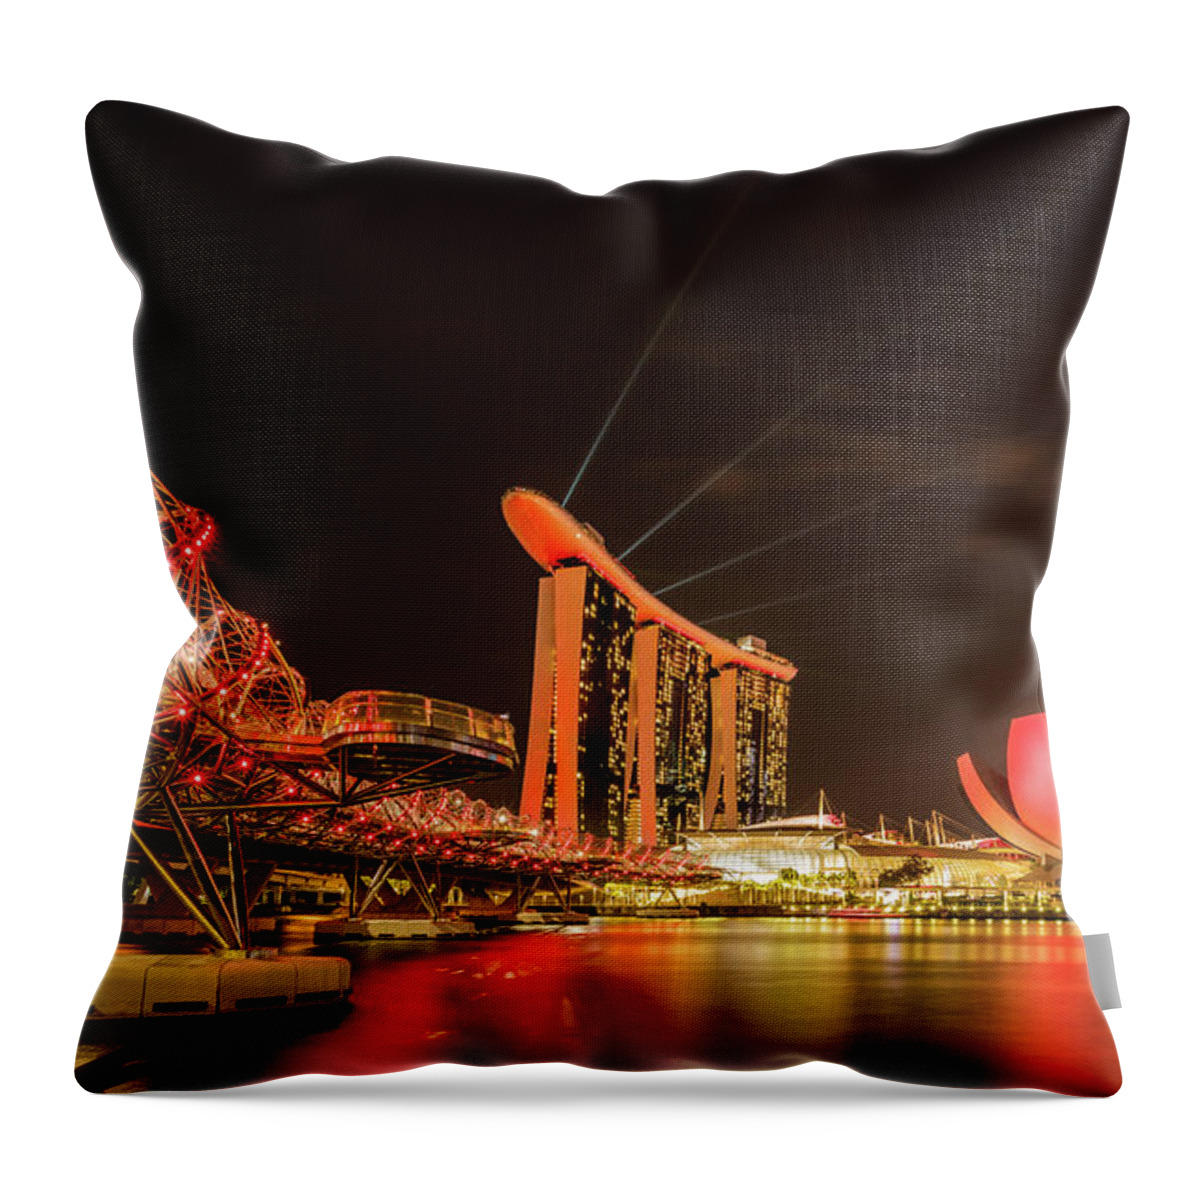 Chriscousins Throw Pillow featuring the photograph Marina Bay Sands by Chris Cousins